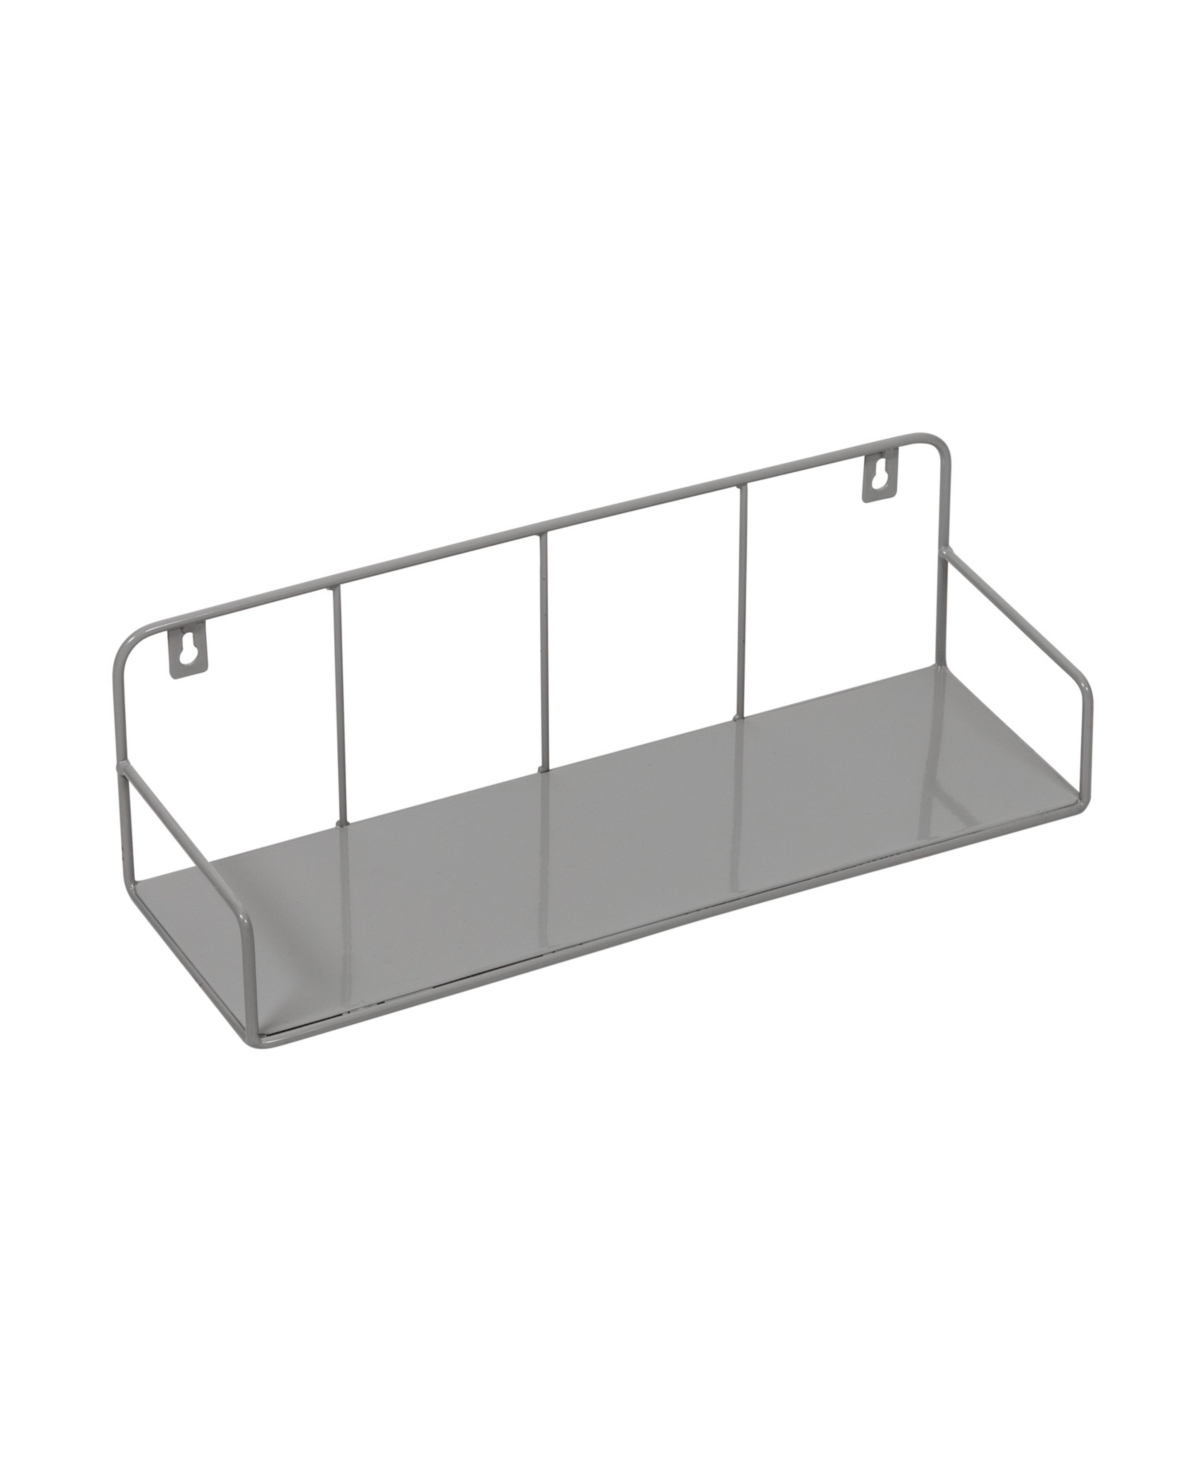 Small Metal Floating Wall Shelf - Gray